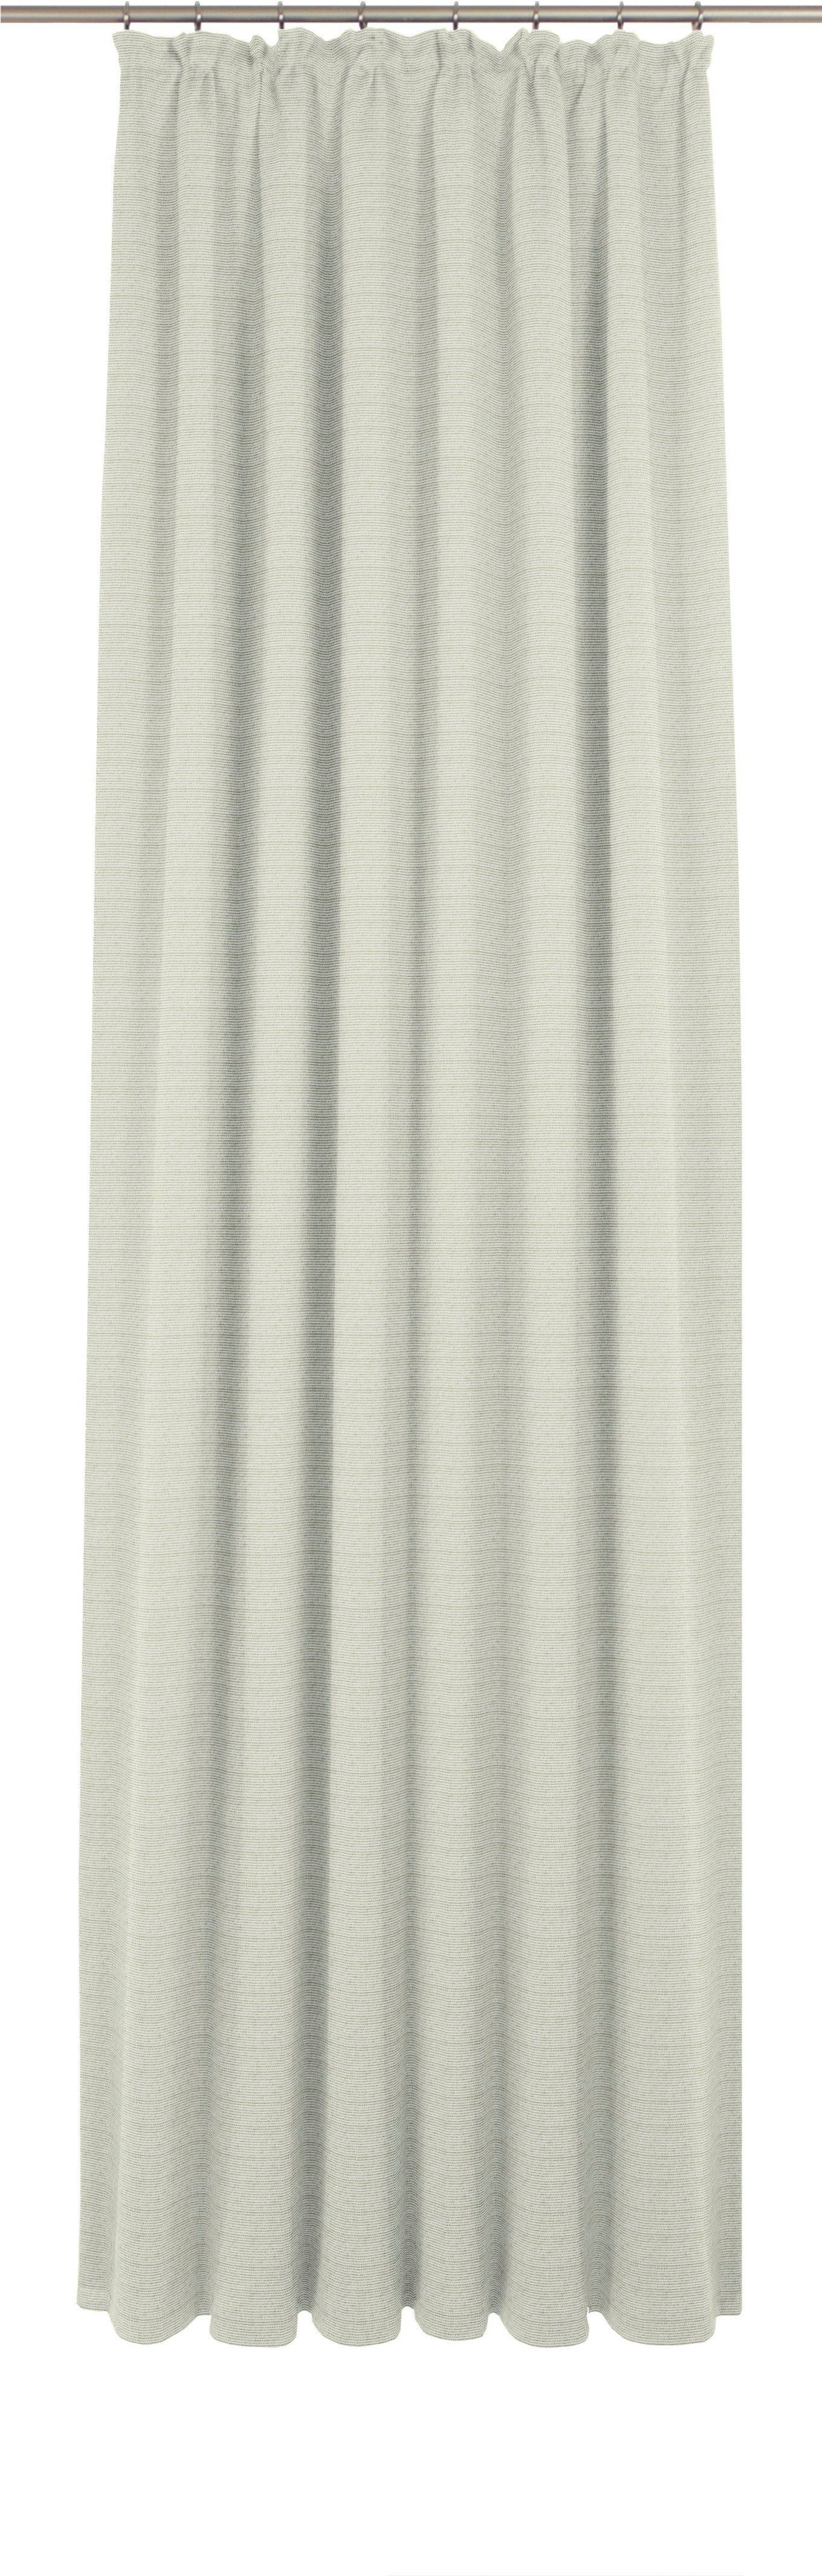 Berwick, (1 St), Kräuselband Wirth, Jacquard blickdicht, Vorhang grau